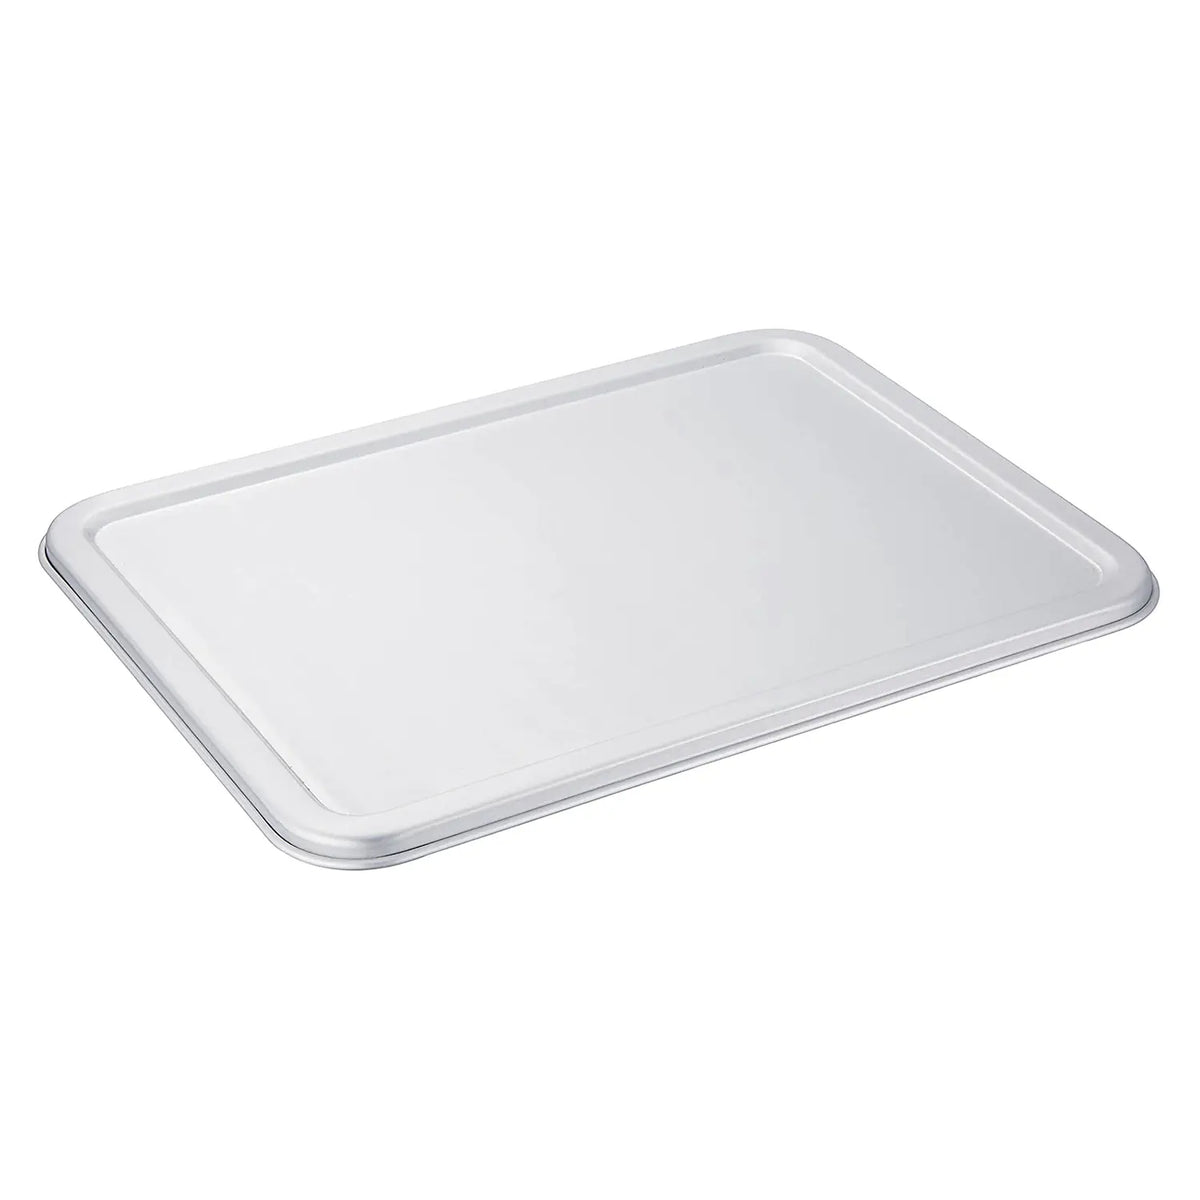 IKD ecoclean Aluminum Stackable Tray for Gyoza &amp; Perishables